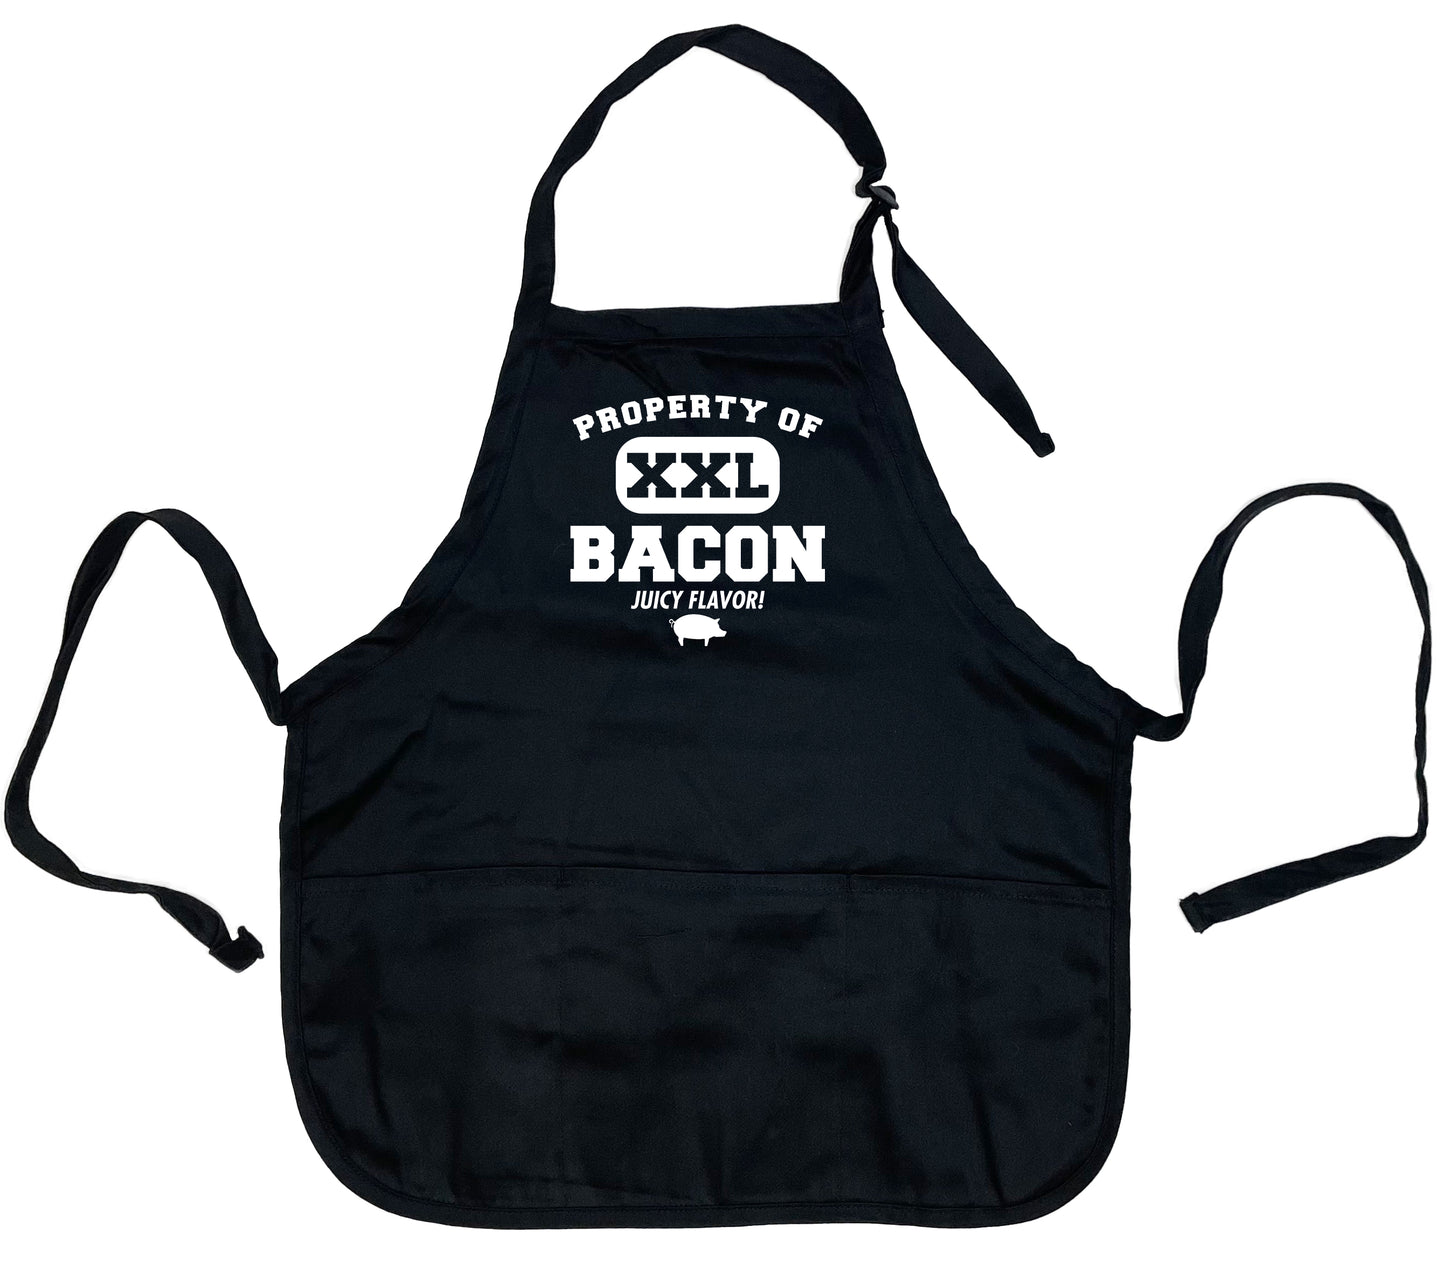 Property Of XXL Bacon Juicy Flavor! Apron